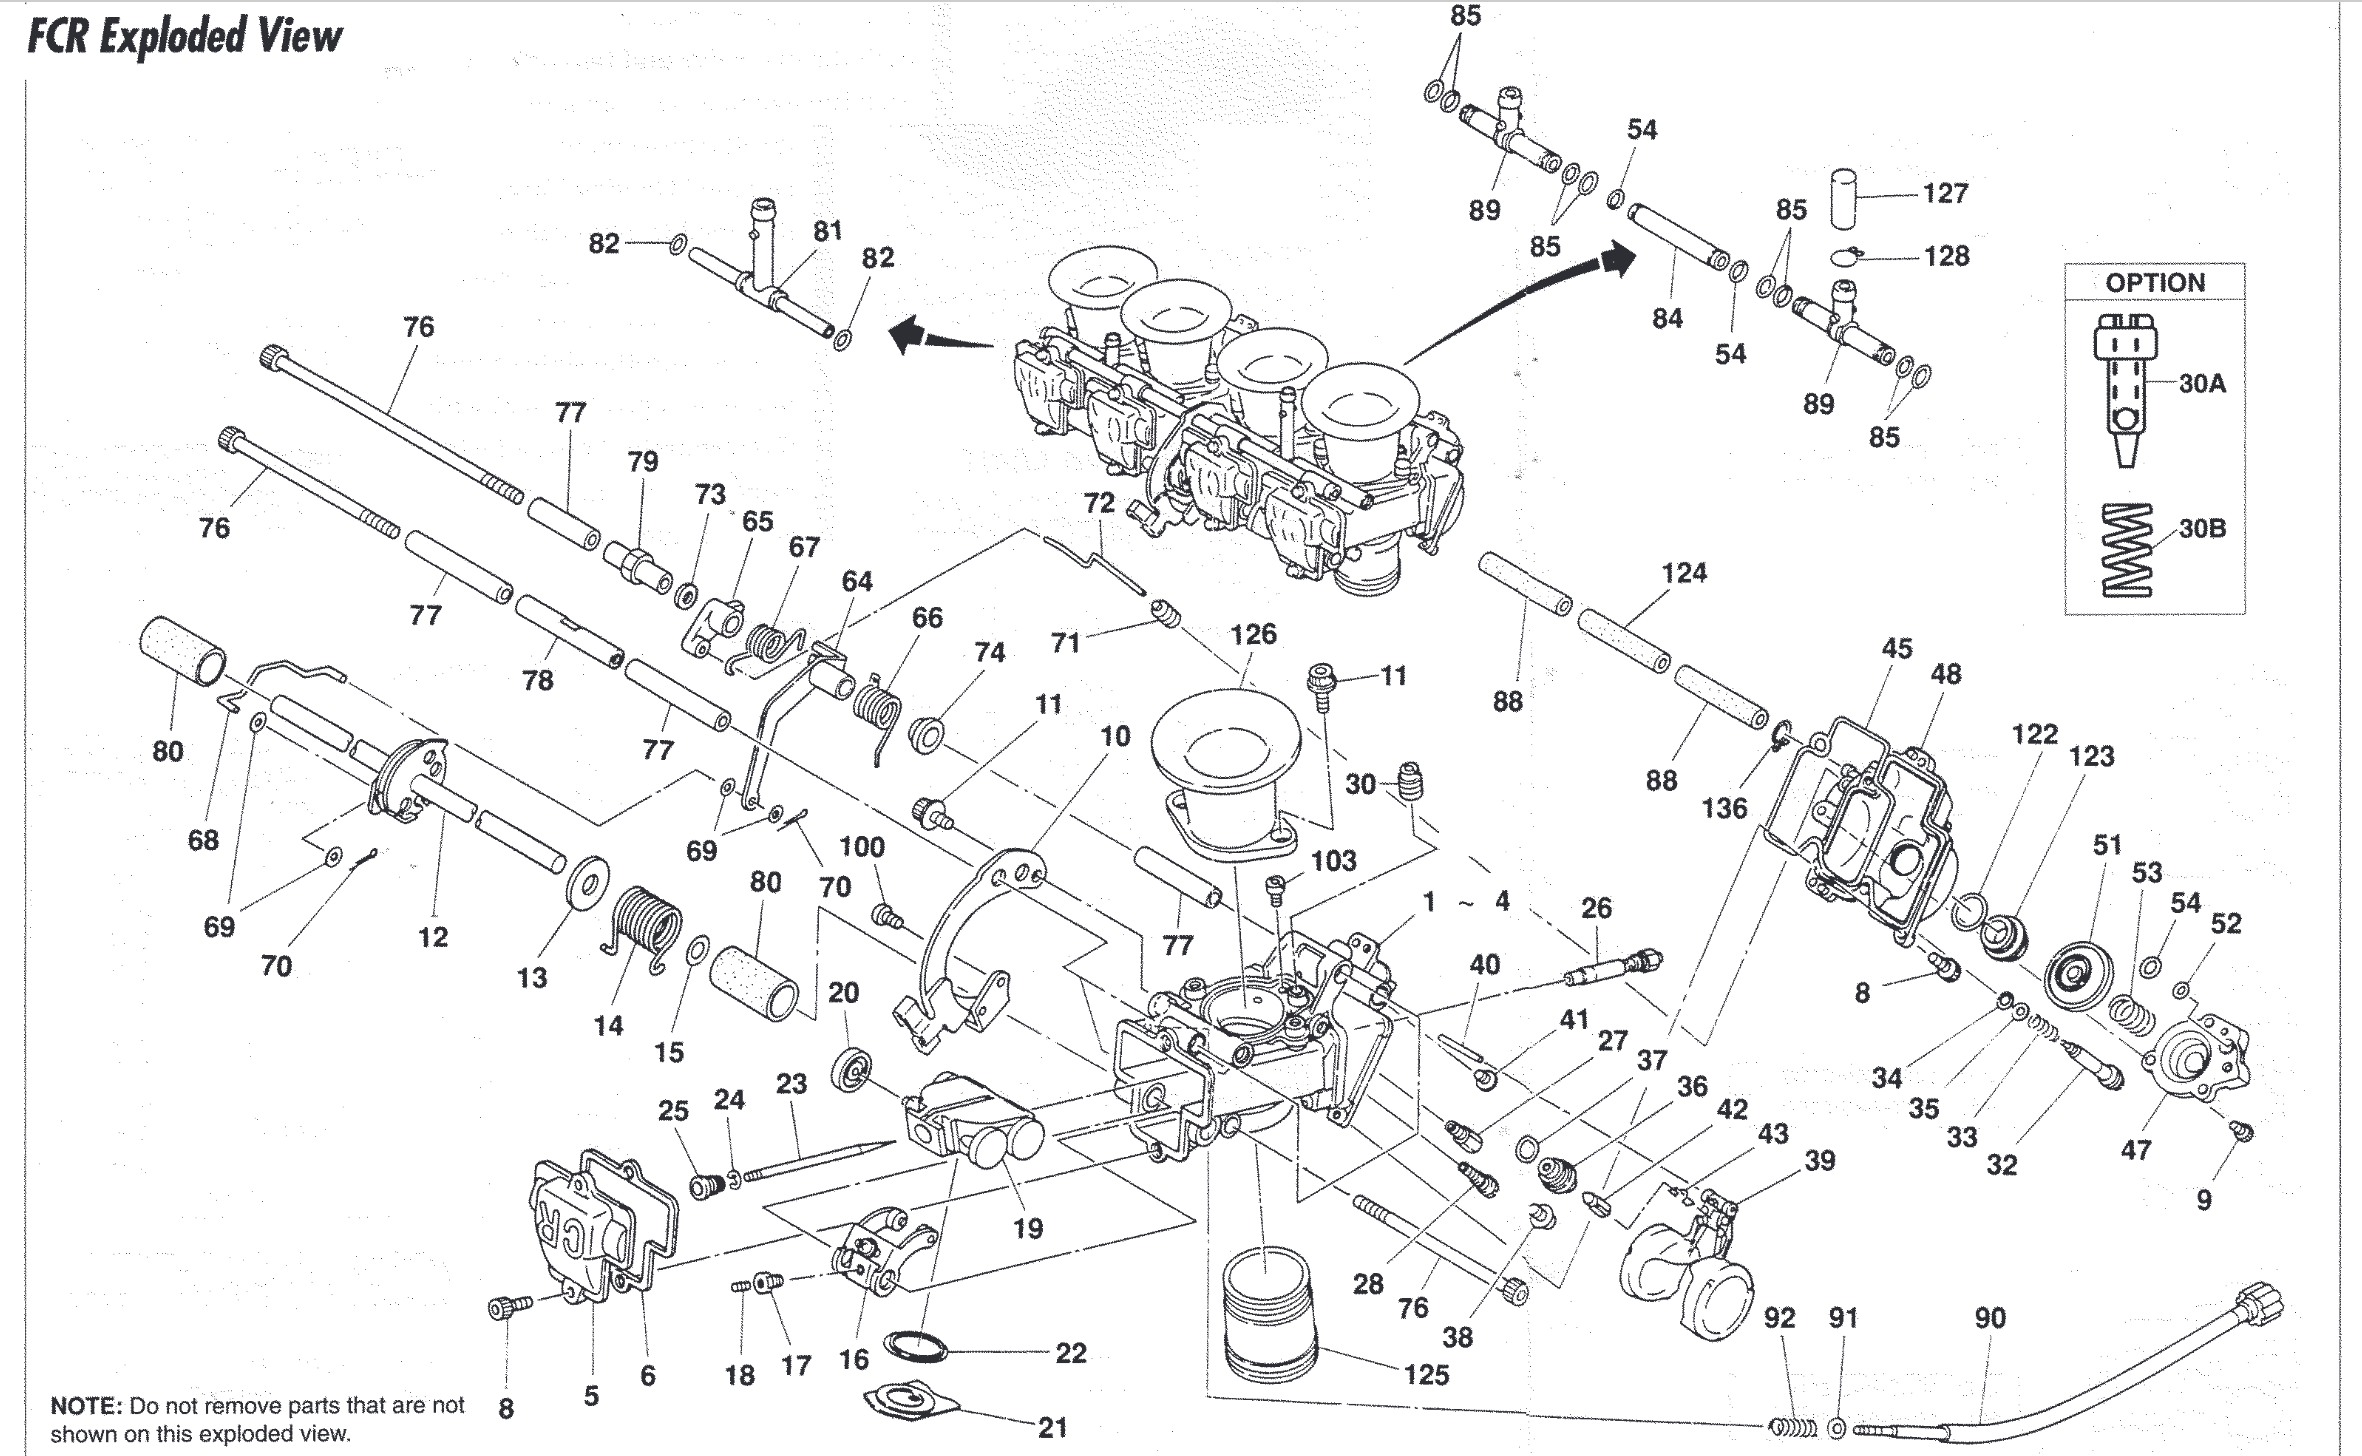 Diagram Part # 122 O-Ring Drain Bolt Keihin FCR Carburetor 